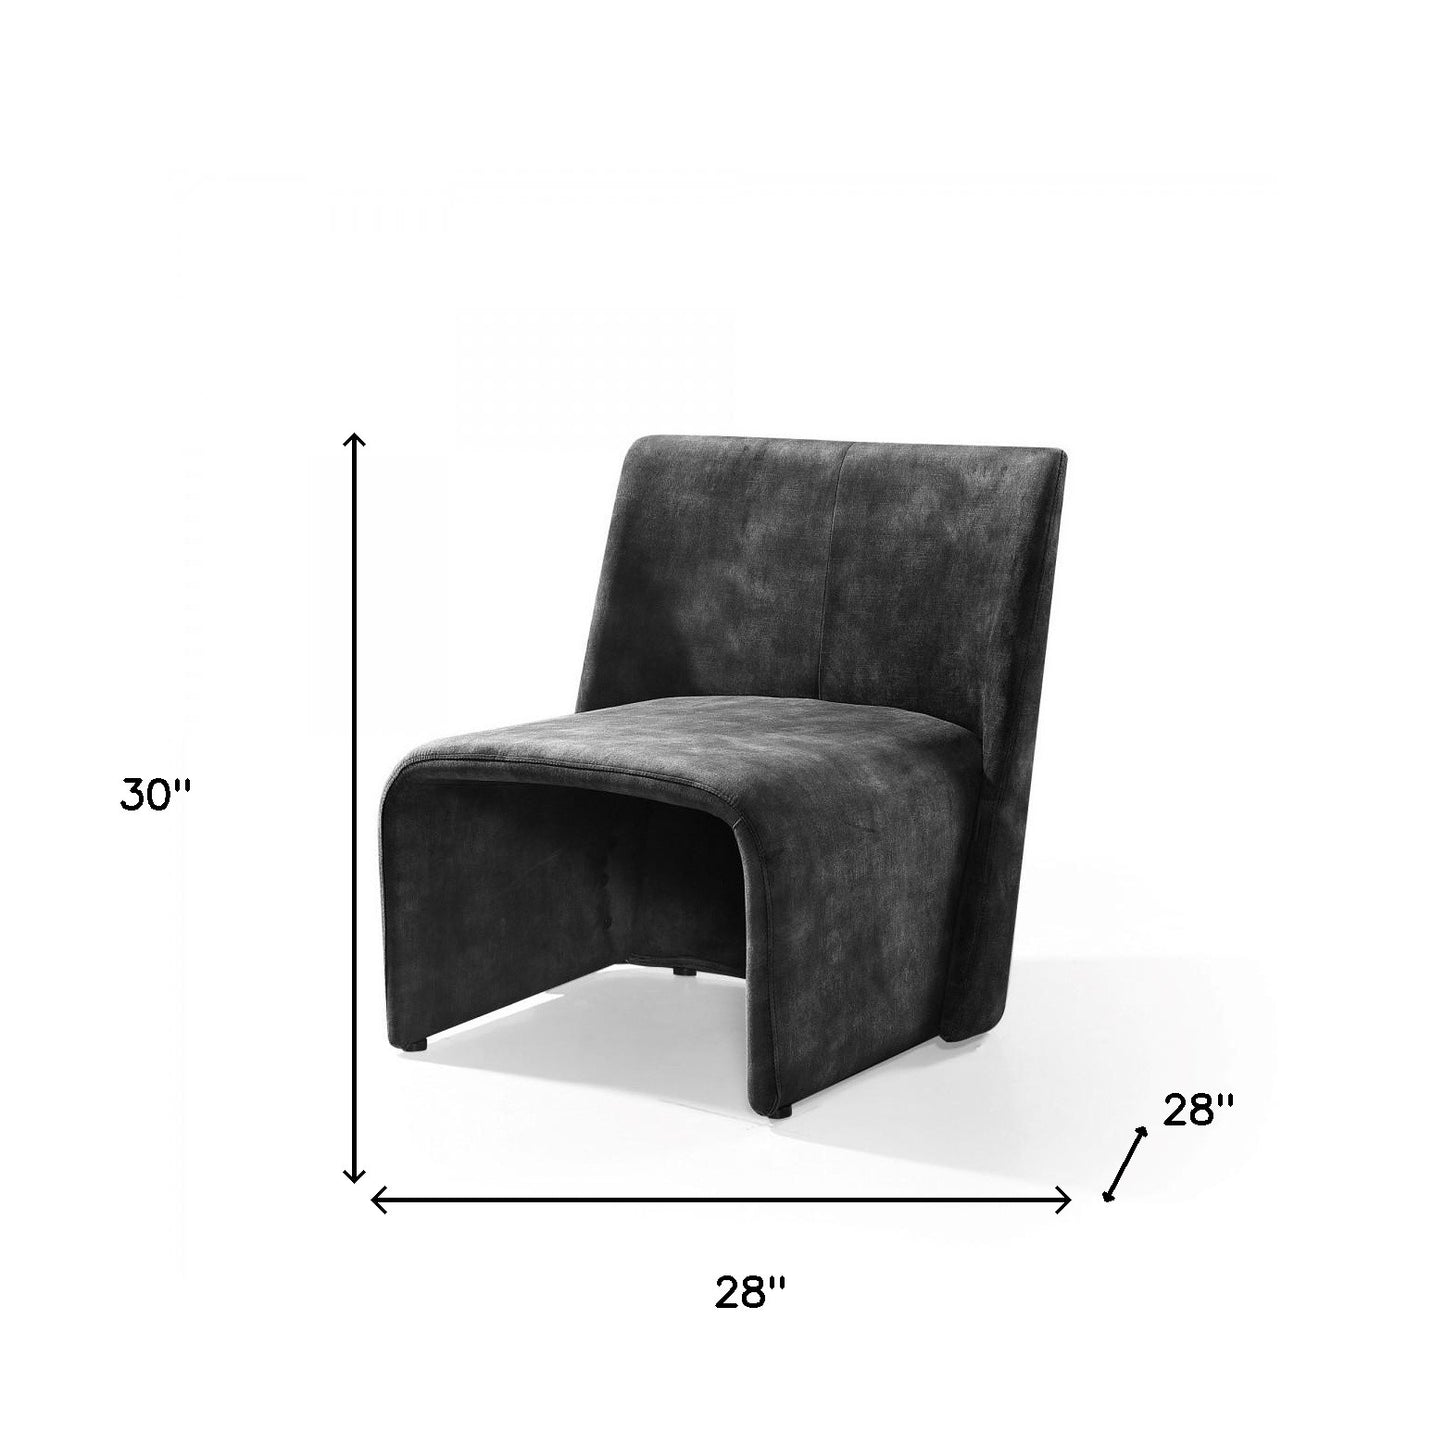 28" Dark Grey Velvet Solid Color Side Chair